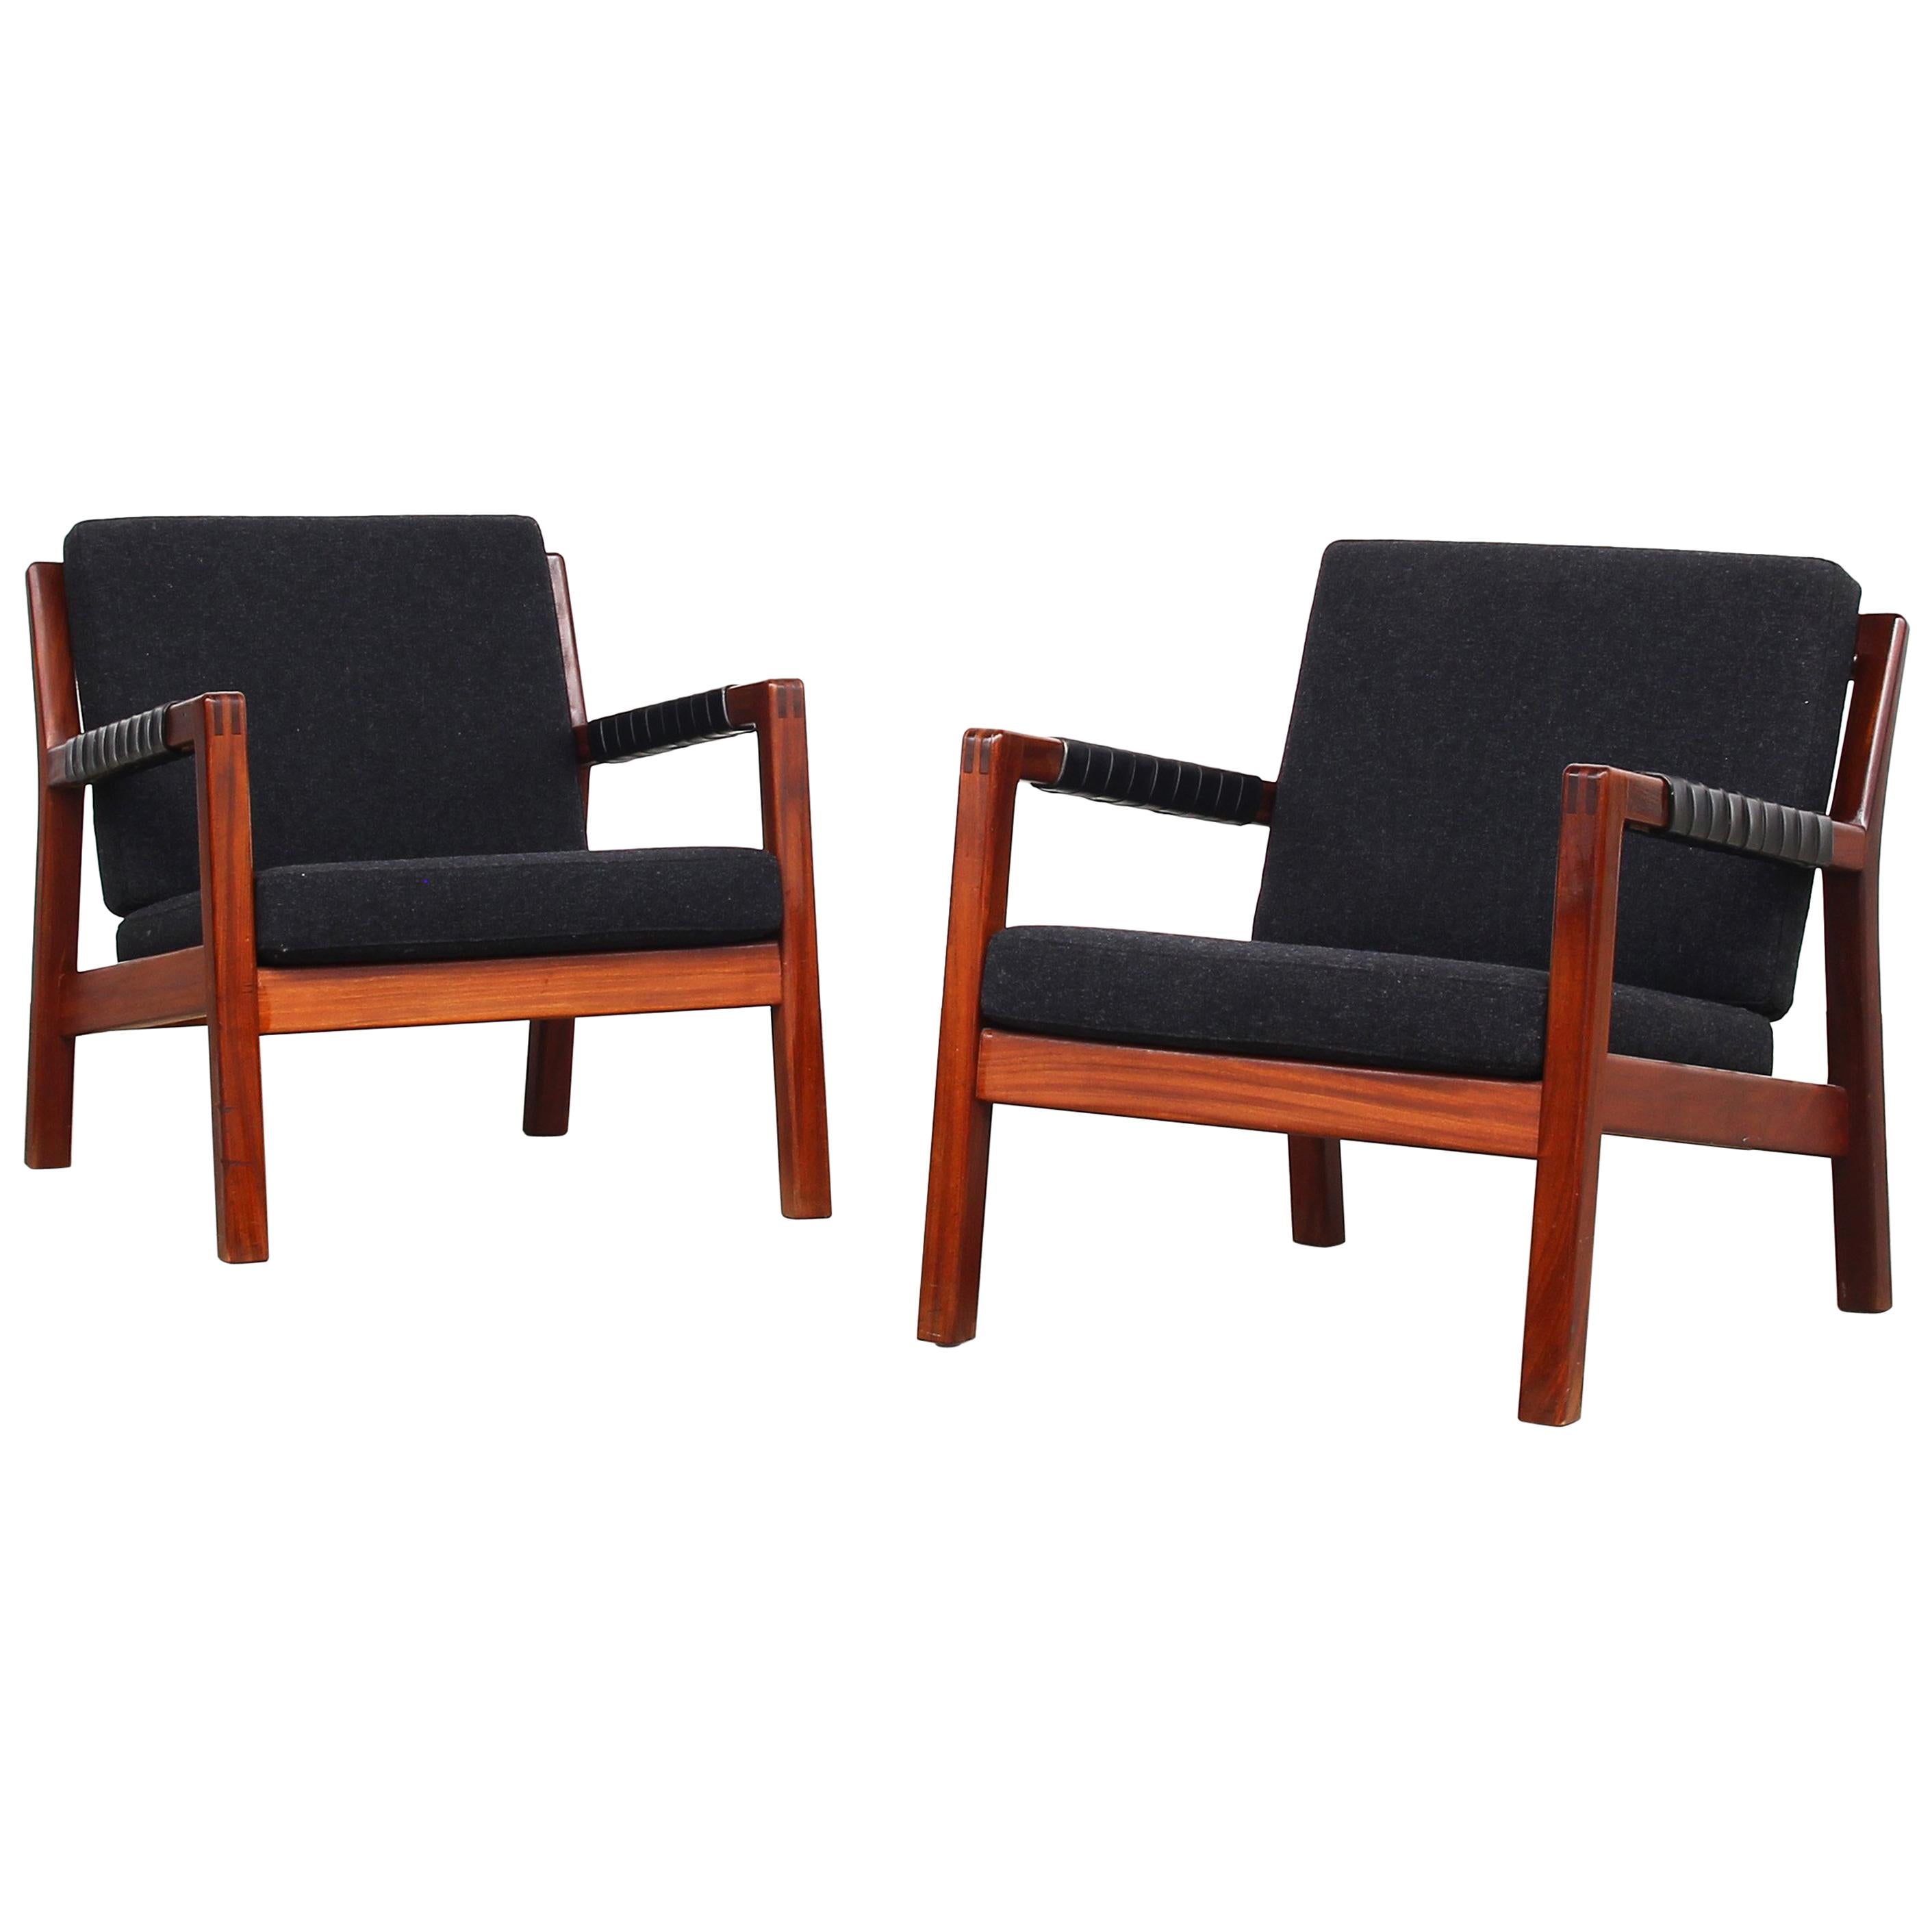 Pair of Easy Lounge Chairs by Carl Gustaf Hiort Af Örnas, Finland